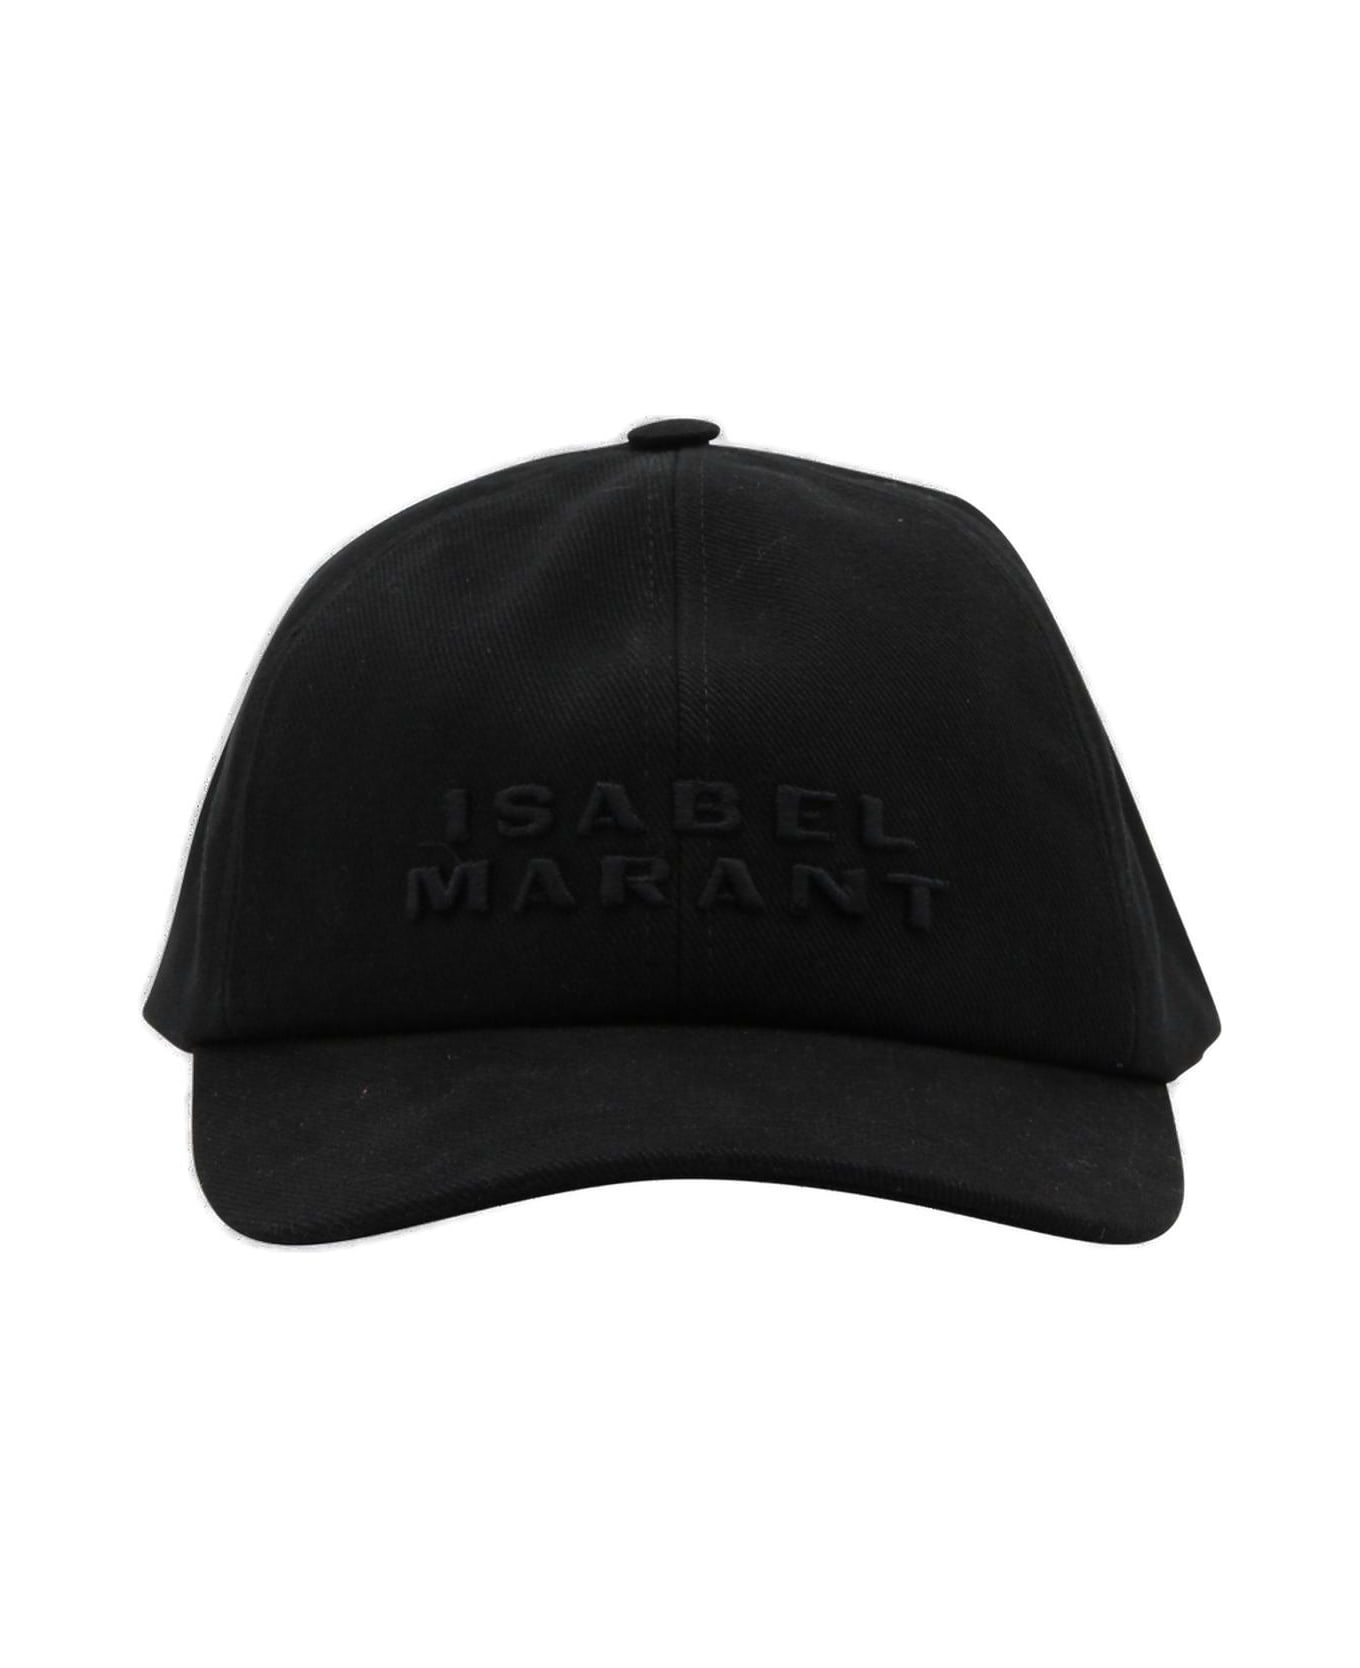 Isabel Marant Baseball Cap - Bkbk Black 帽子